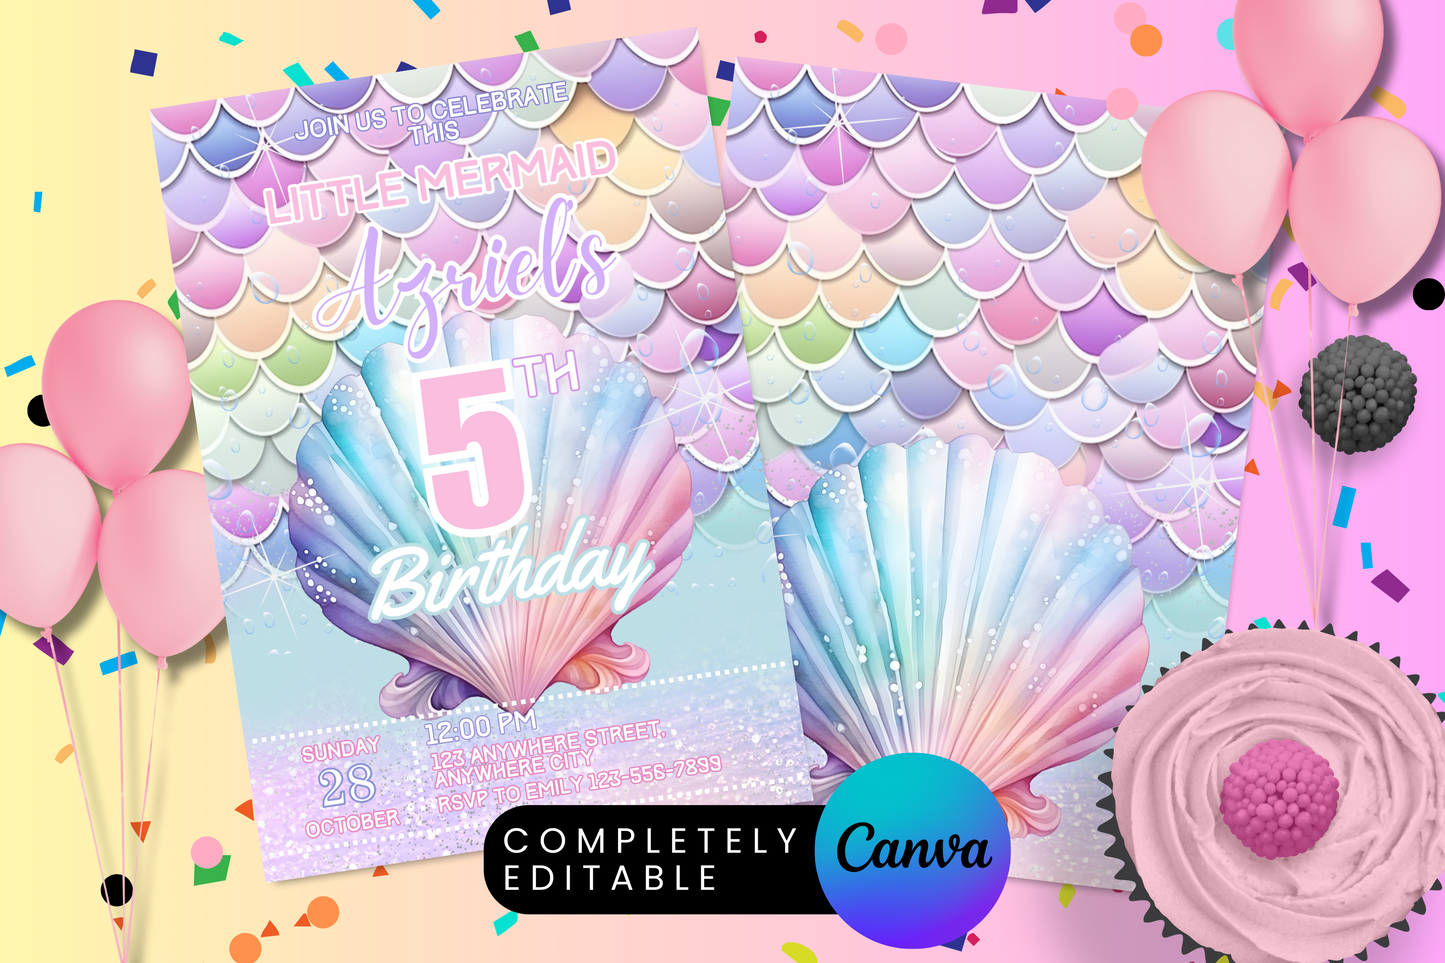 Mermaid Scales Birthday Party Invitation